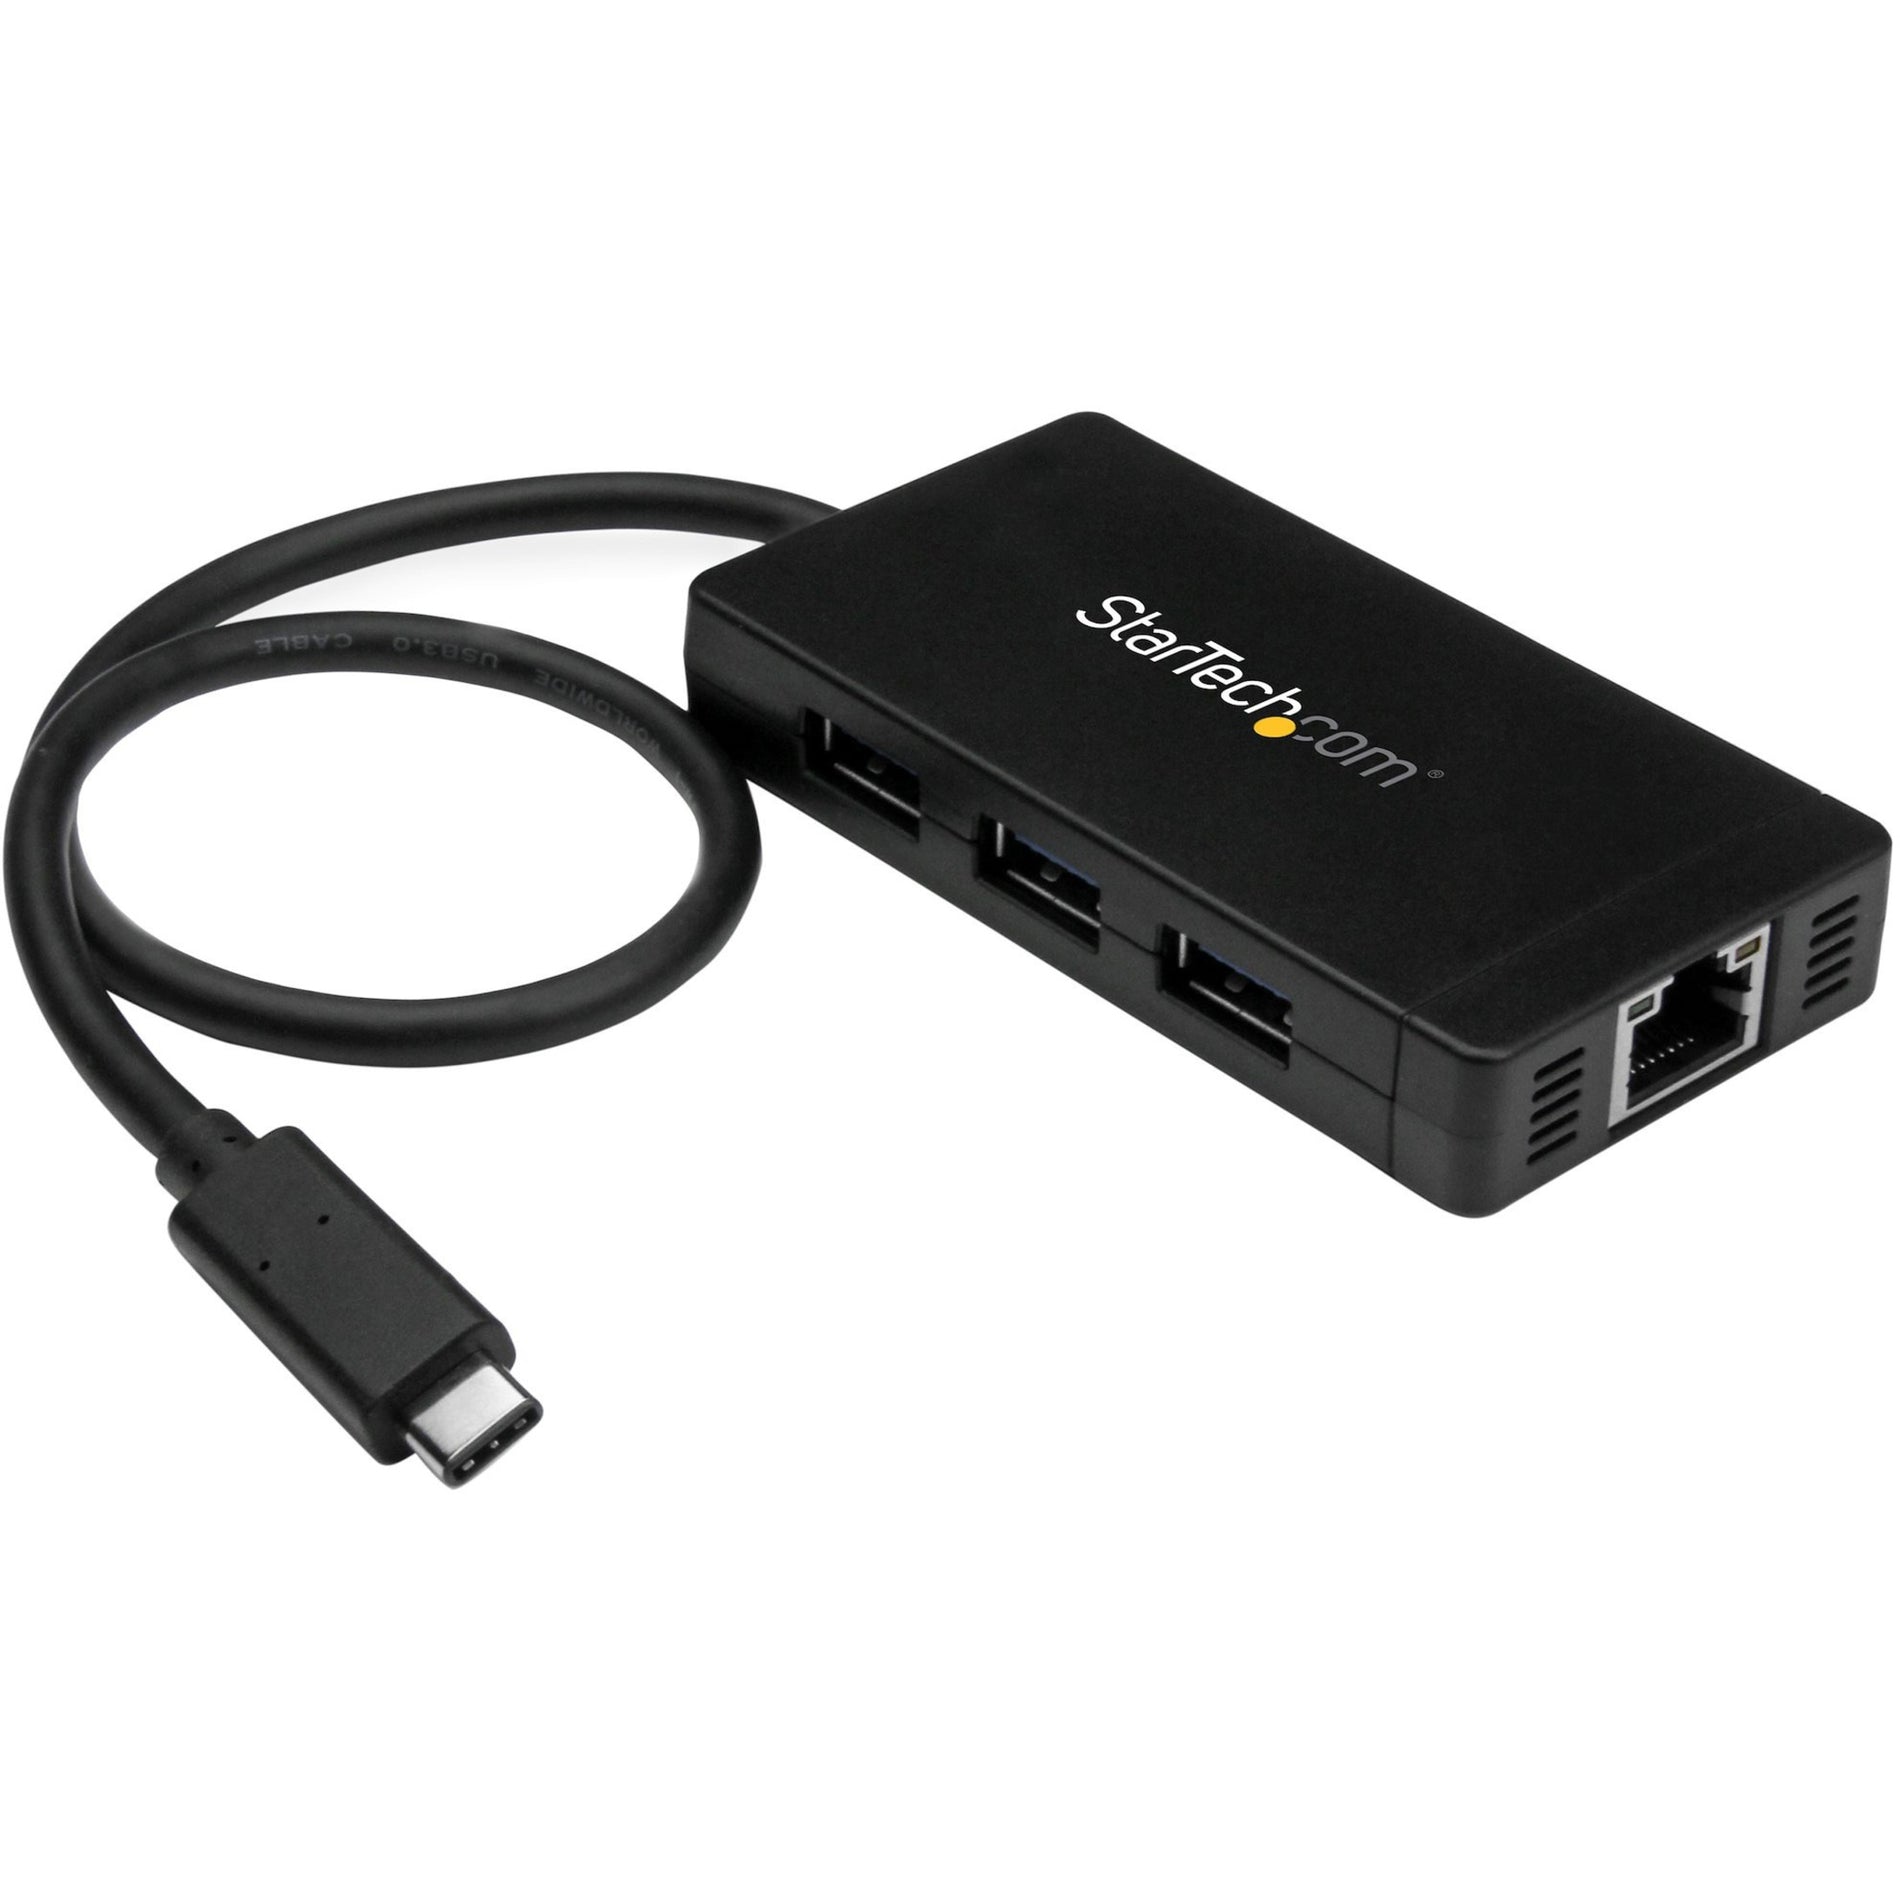 StarTech.com HB30C3A1GE 3-port USB 3.0 Hub Plus GbE, USB C Hub with Gigabit Ethernet